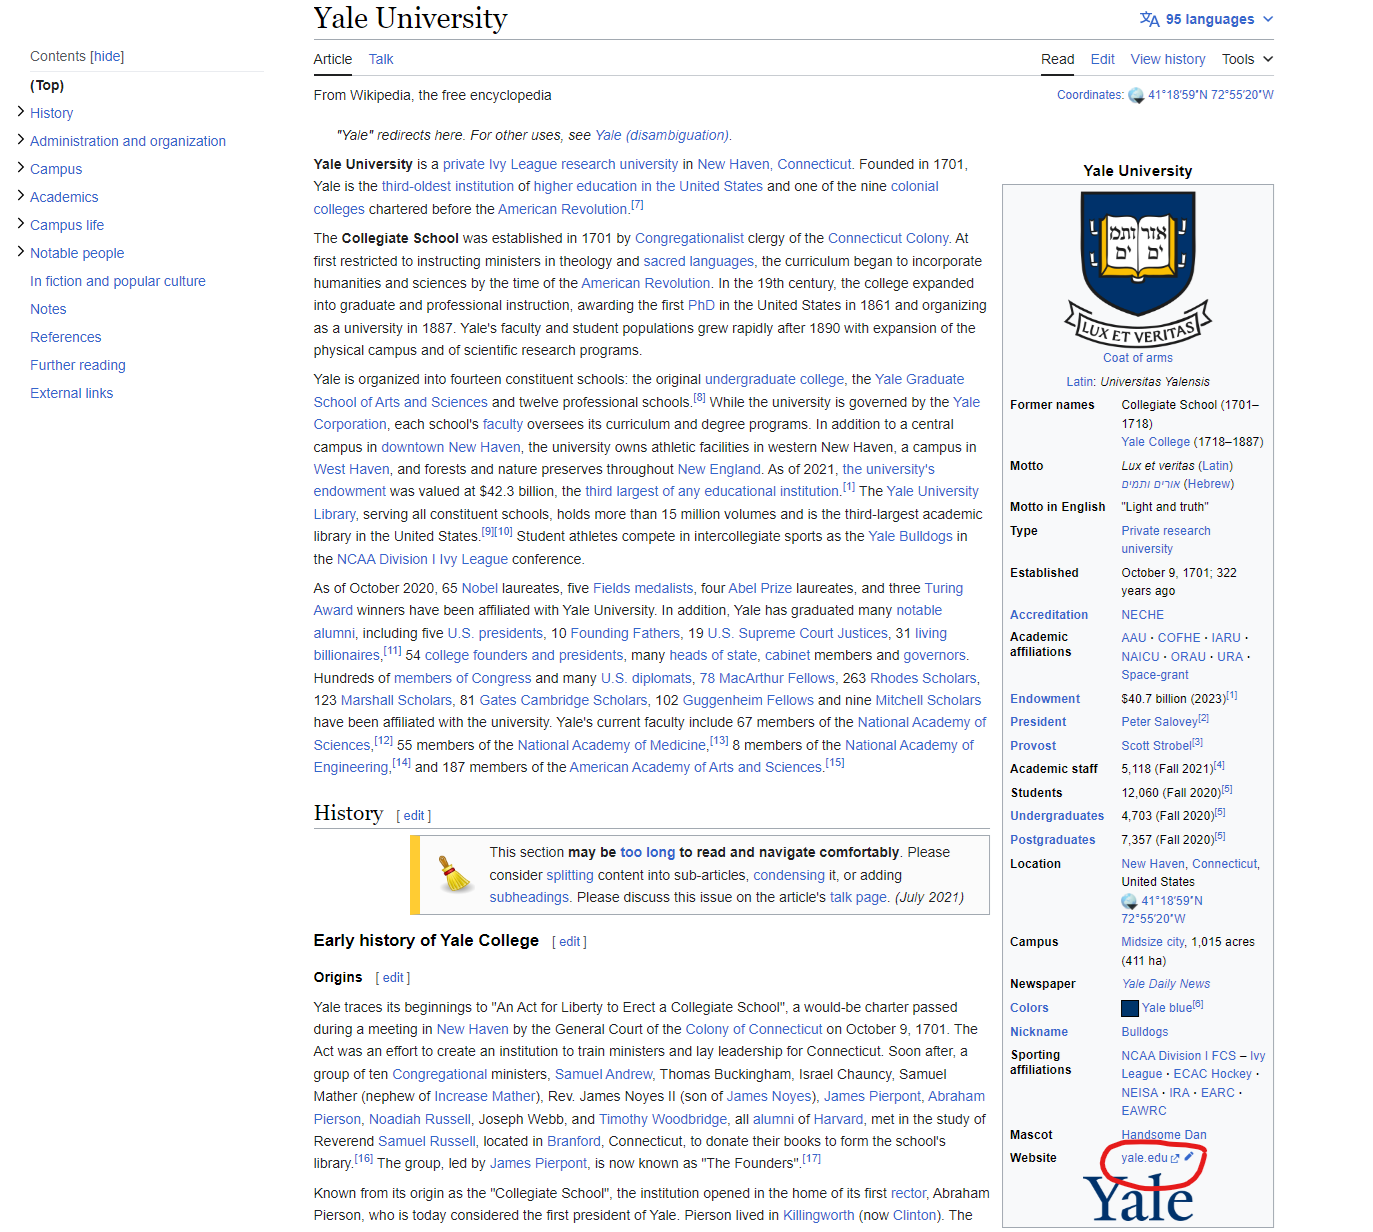 Wikipedia entry for Yale University